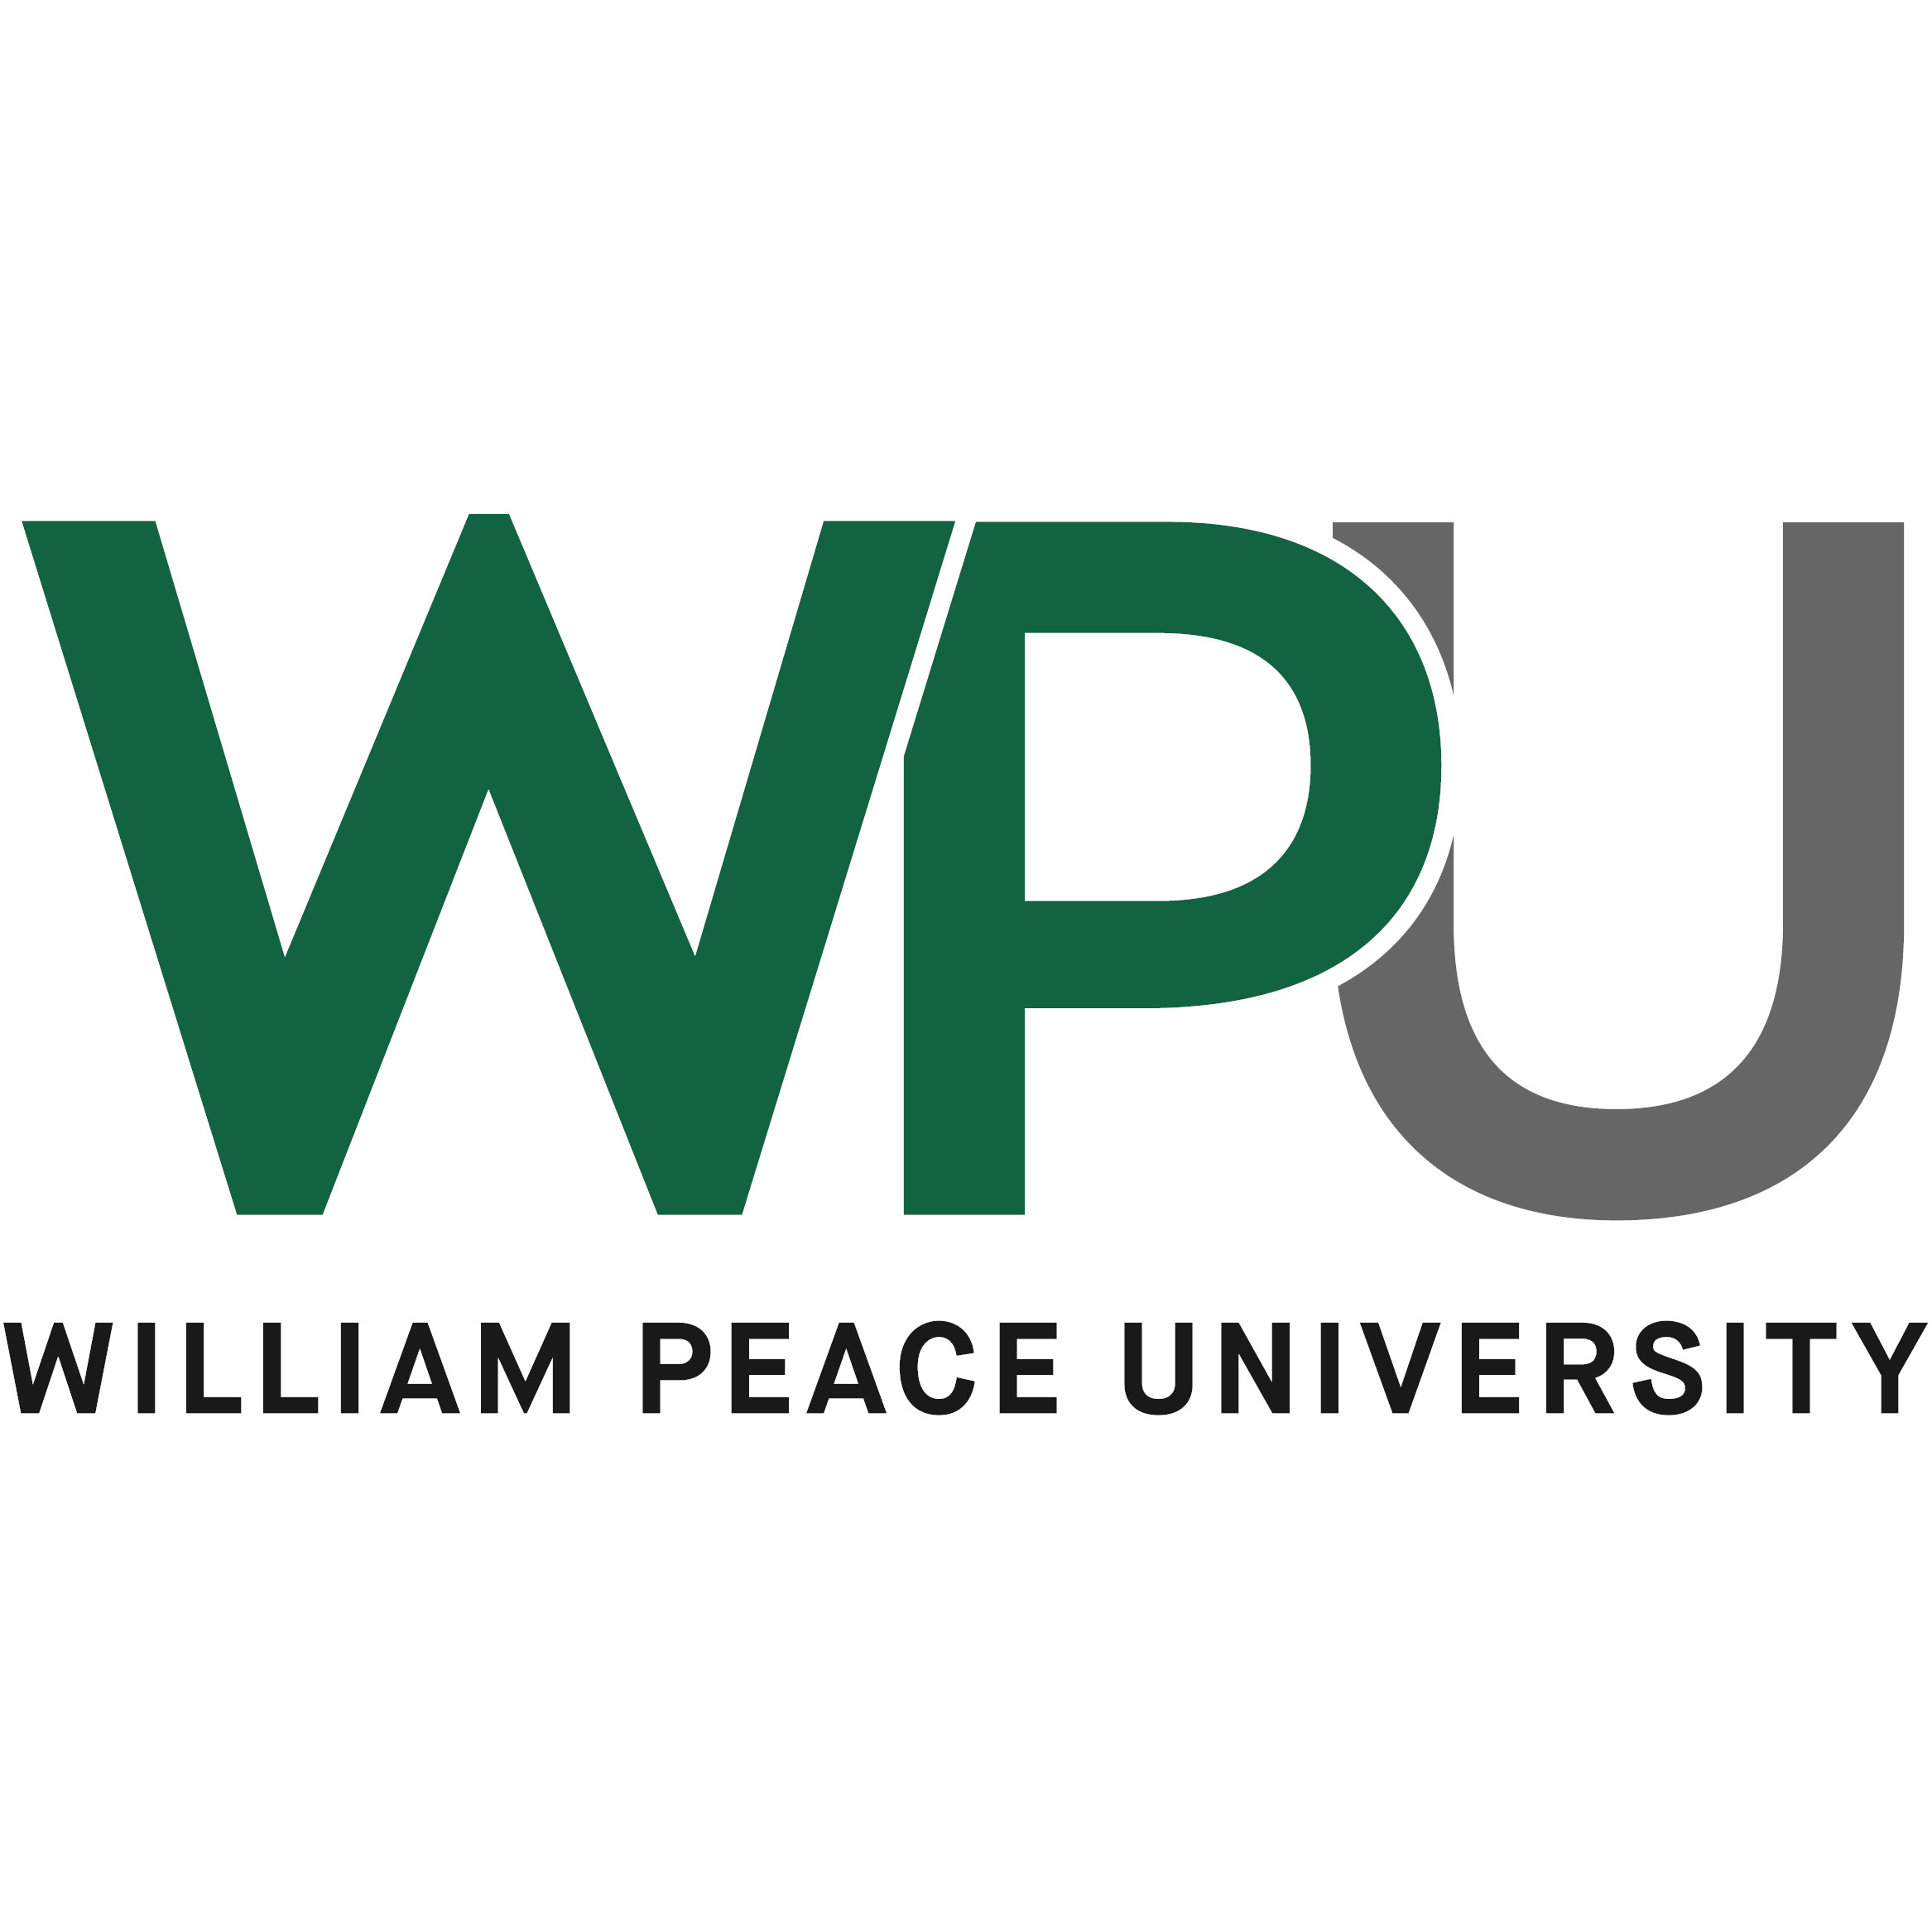 William Peace University logo